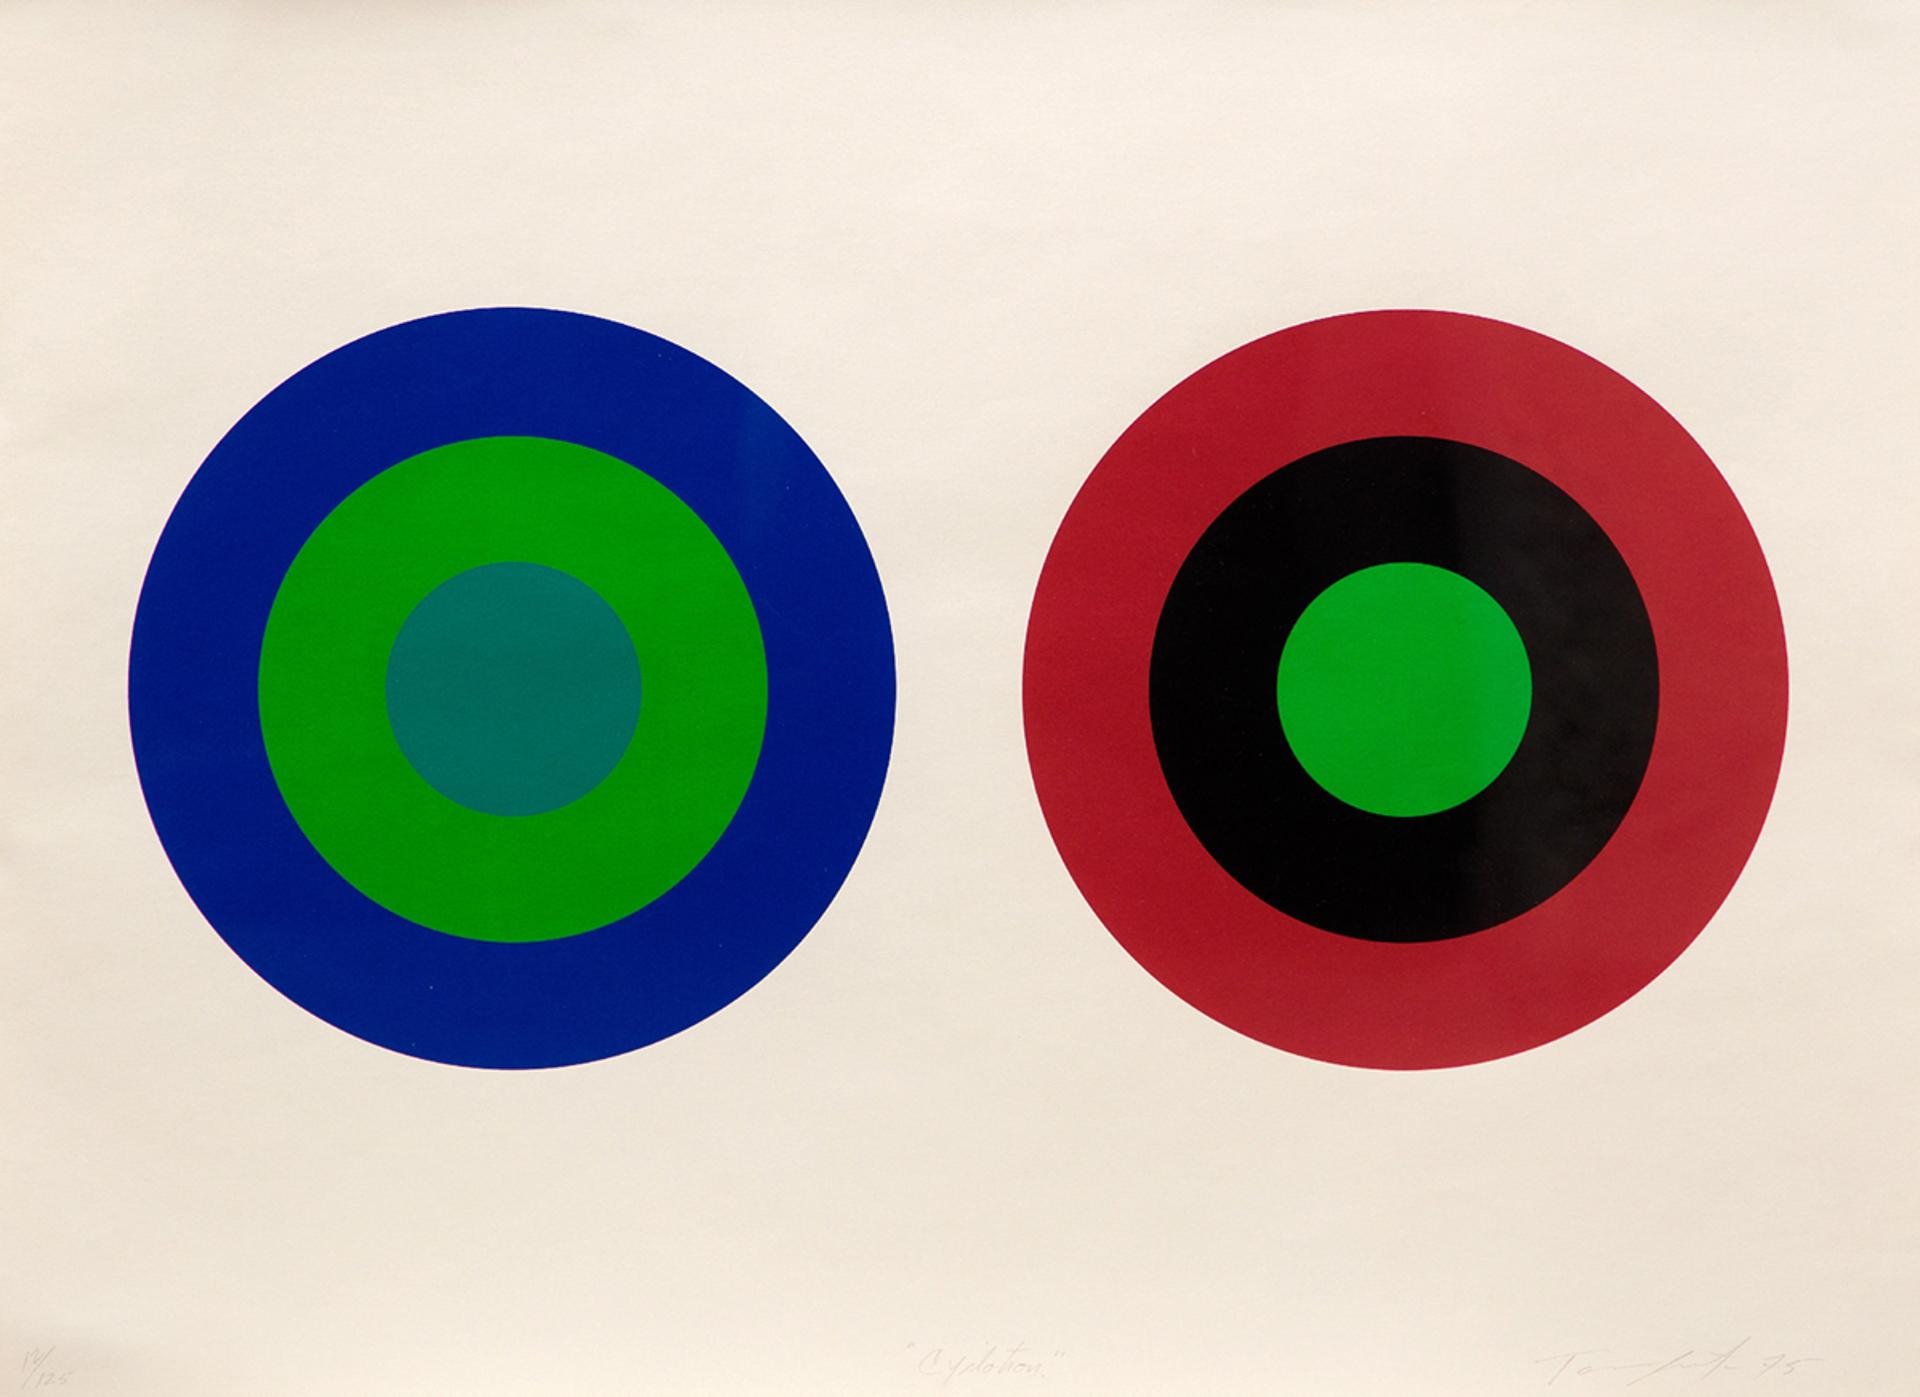 Claude Tousignant (1932) - Cyclothon, 1975